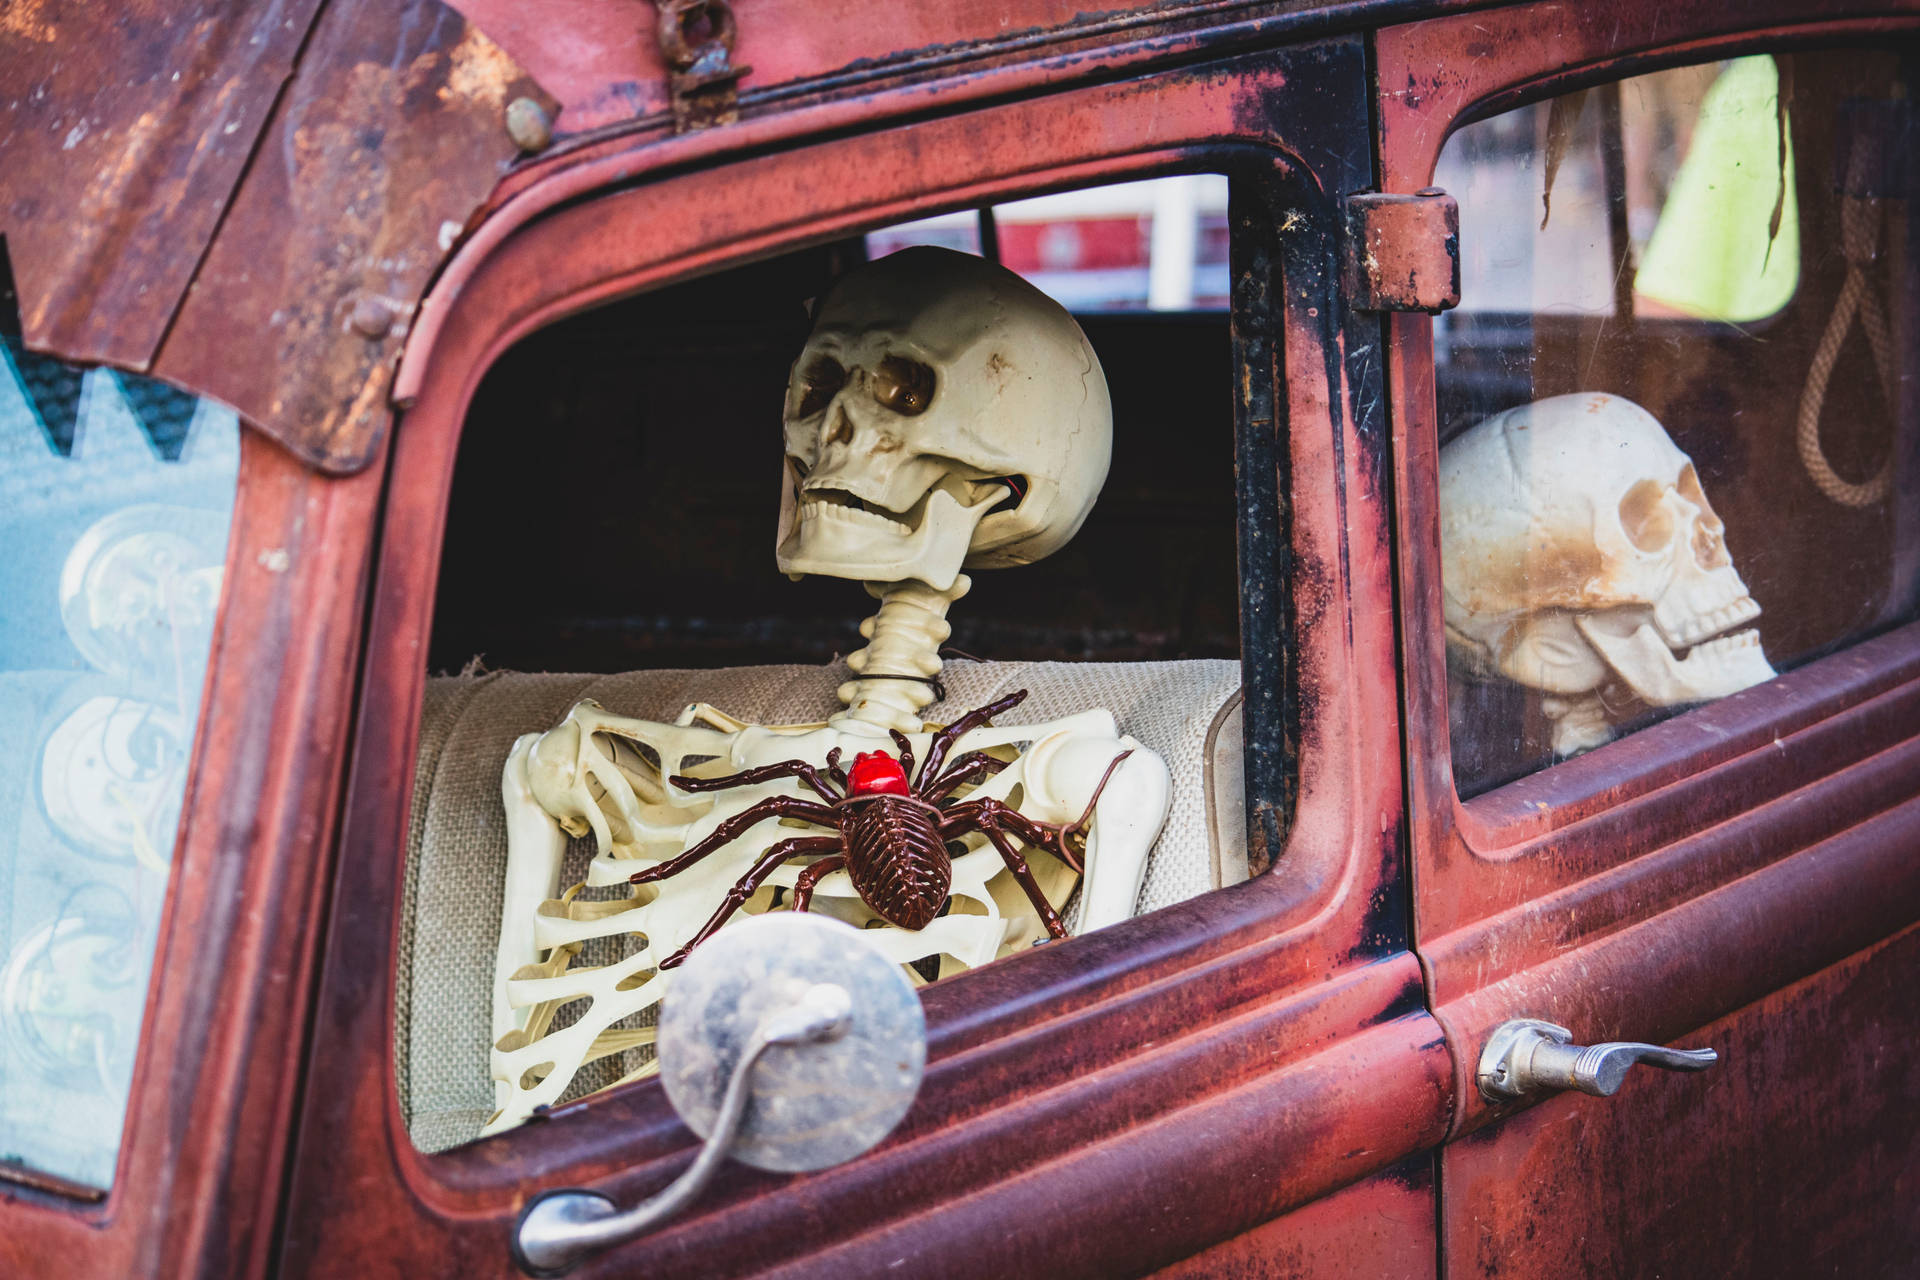 Spooky Skeletons On The Car Wallpaper